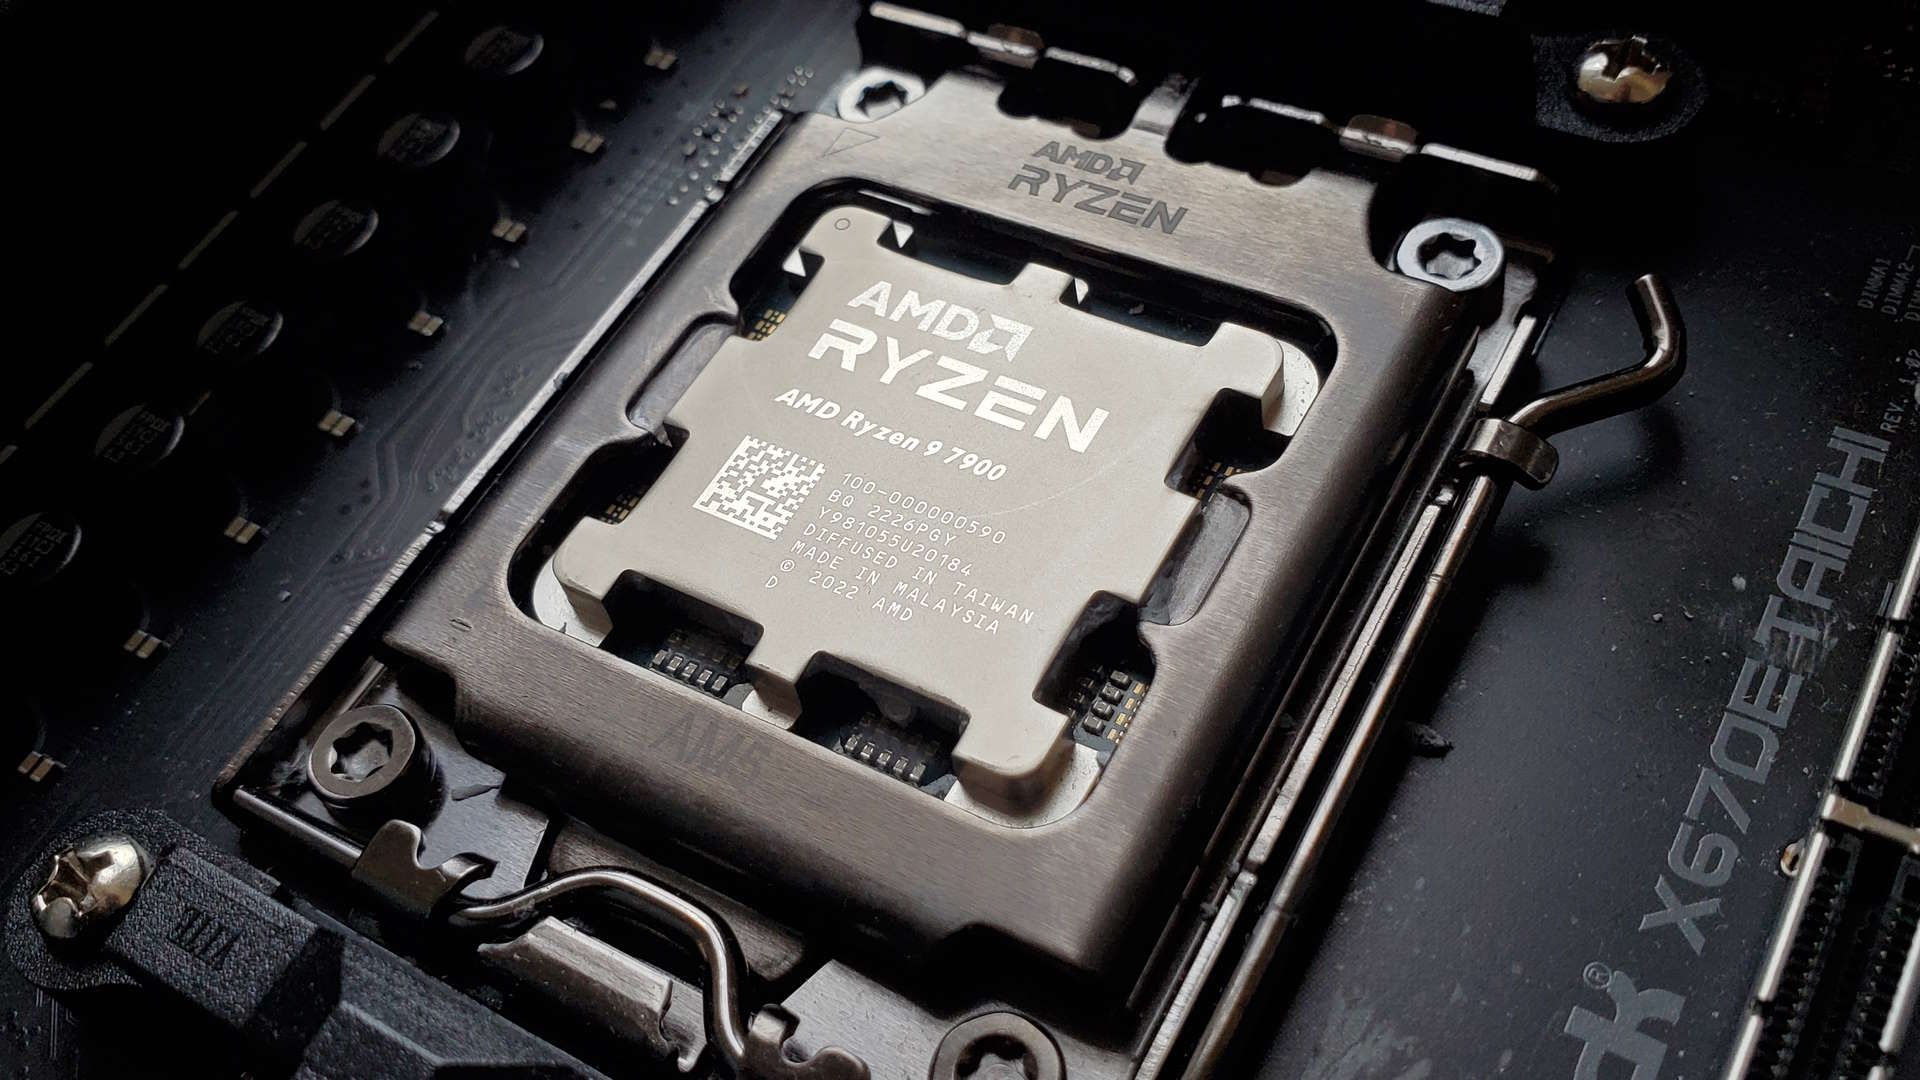 AMD Ryzen 9 7900X Review